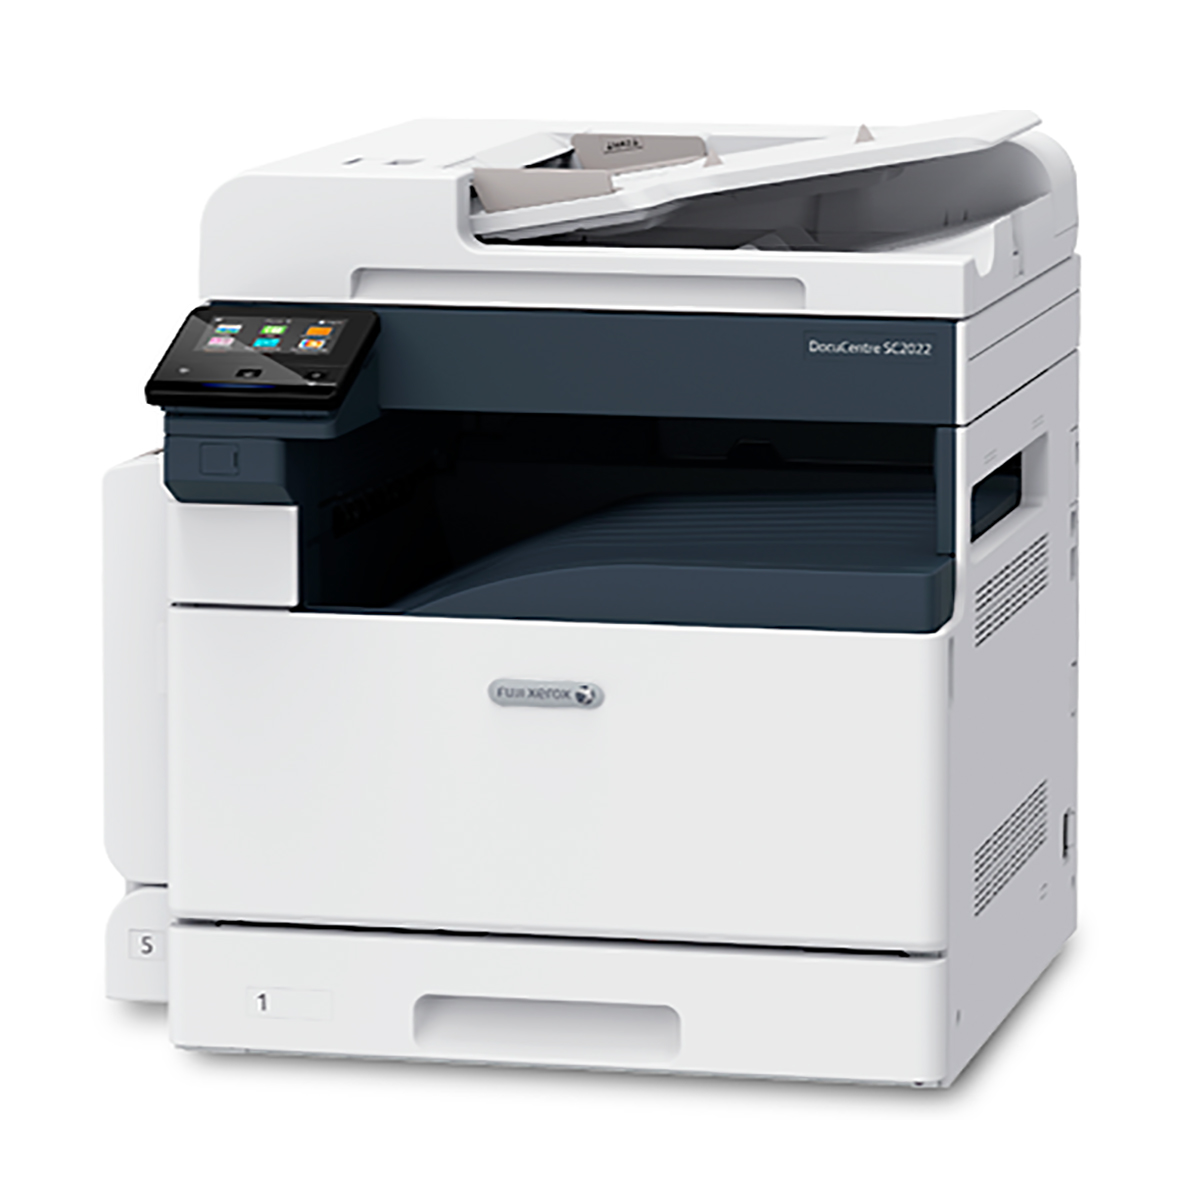 How Do I Get My Xerox Printer Back Online